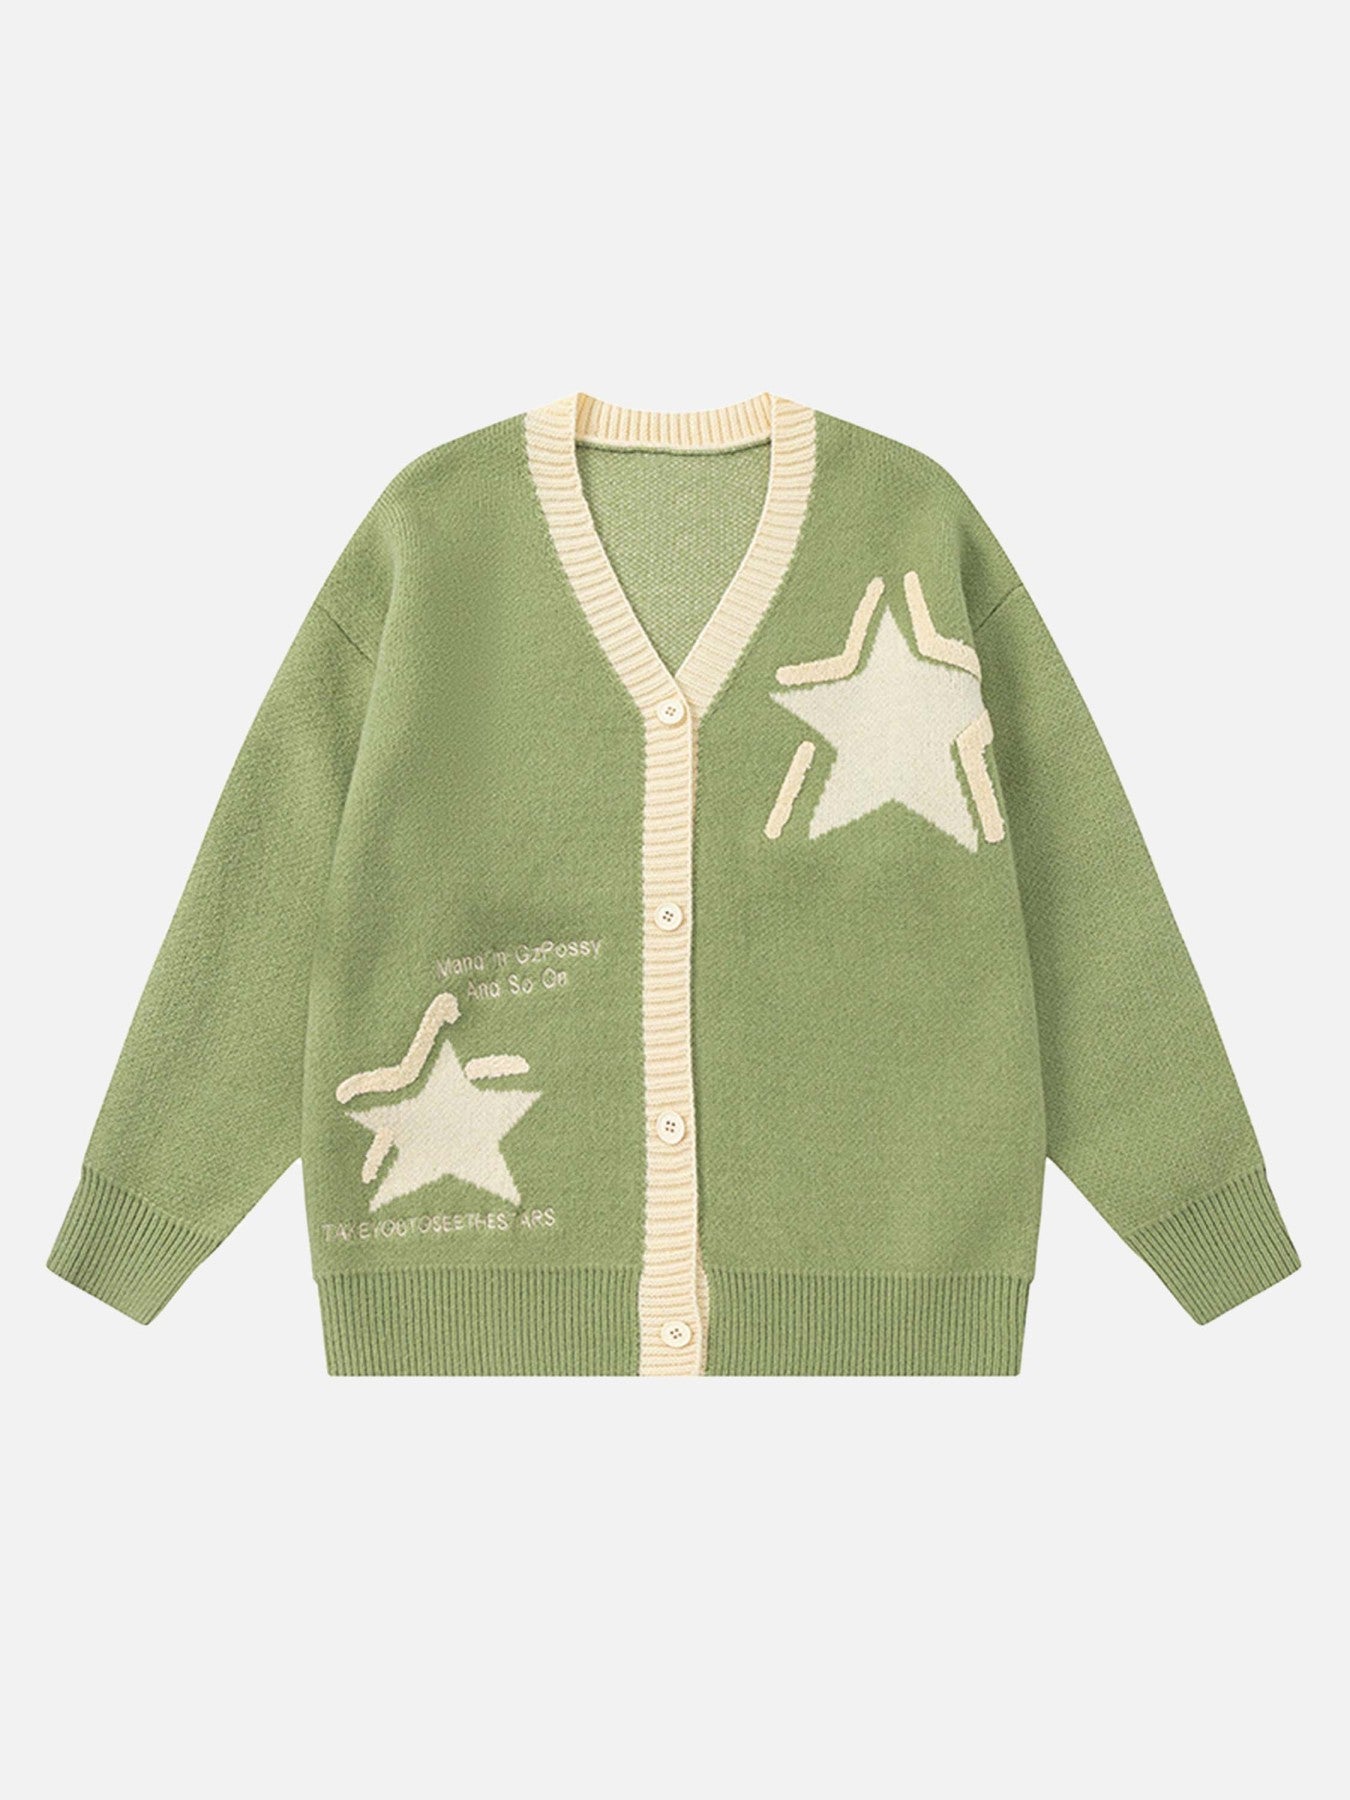 Thesupermade Vintage Star V-Neck Cardigan Sweater